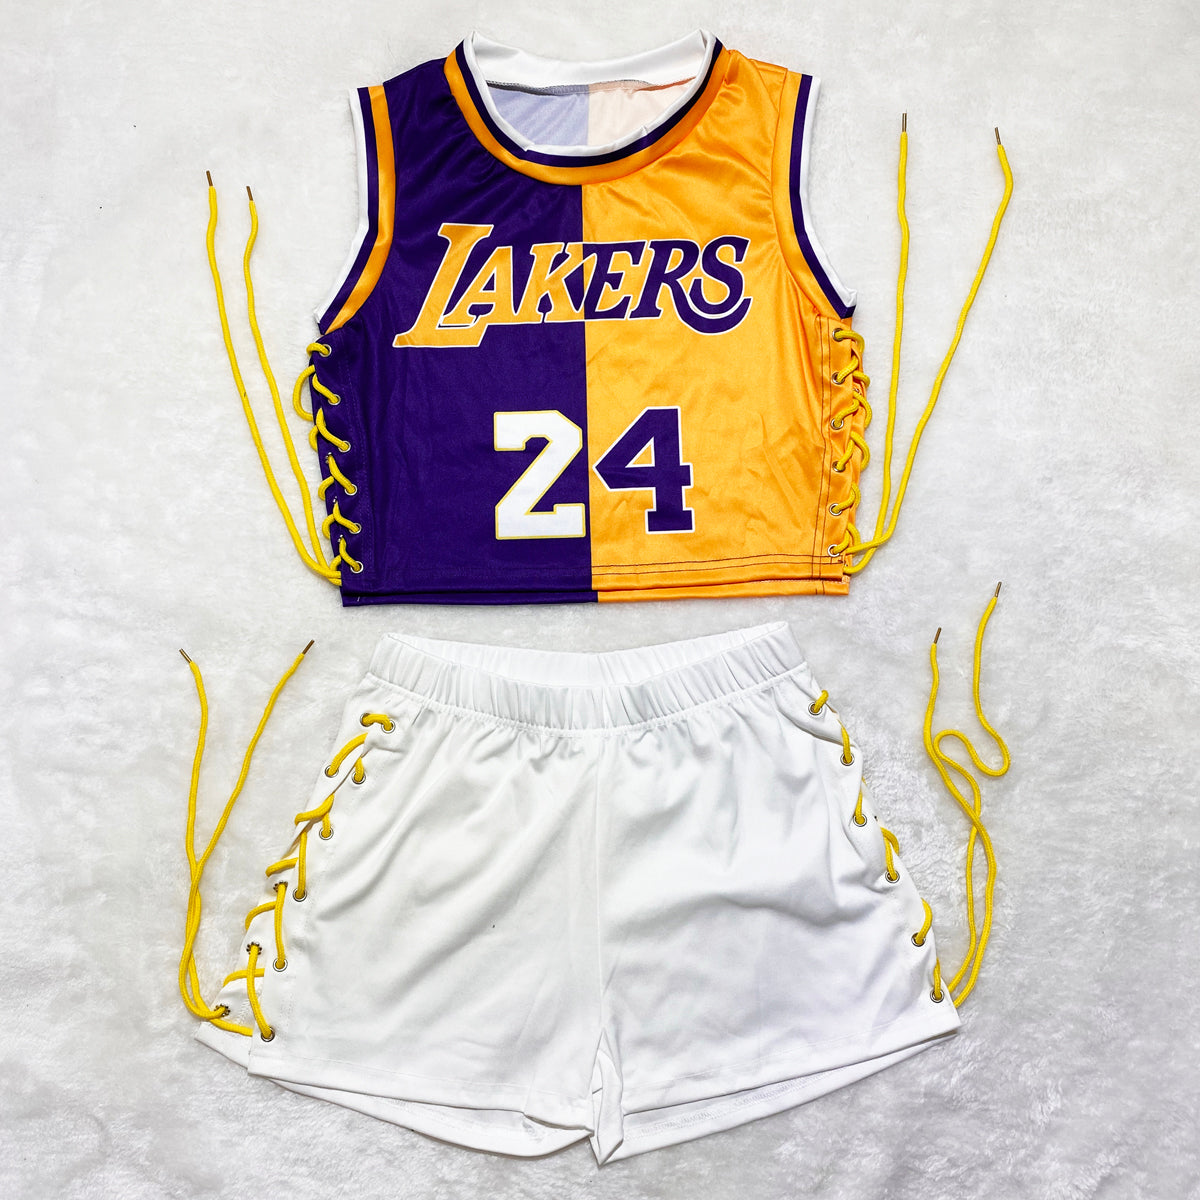 Lakers Jersey & Shorts Set